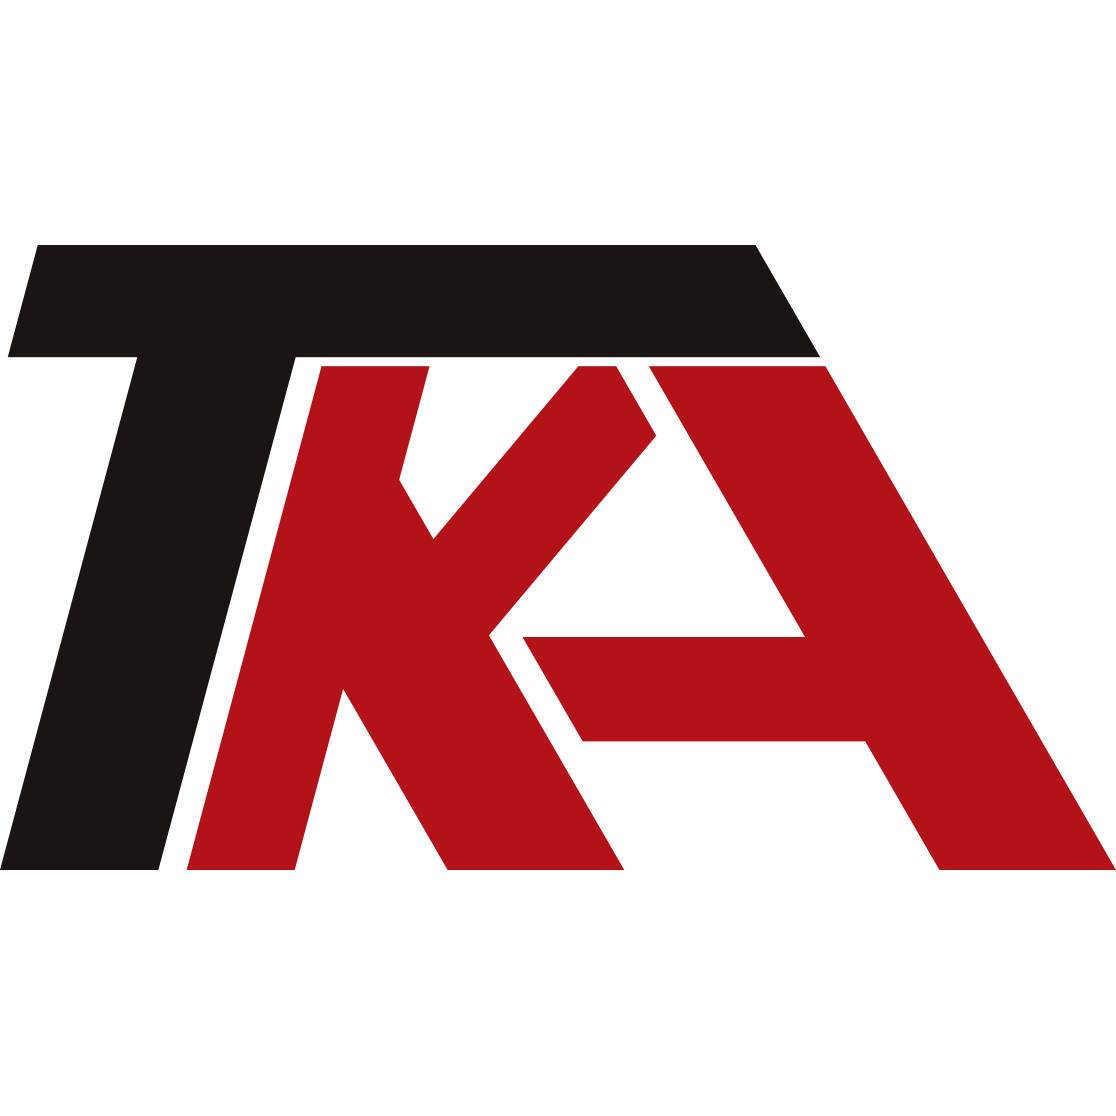 Tka. Tka 7. Логотип s-Group 2023.